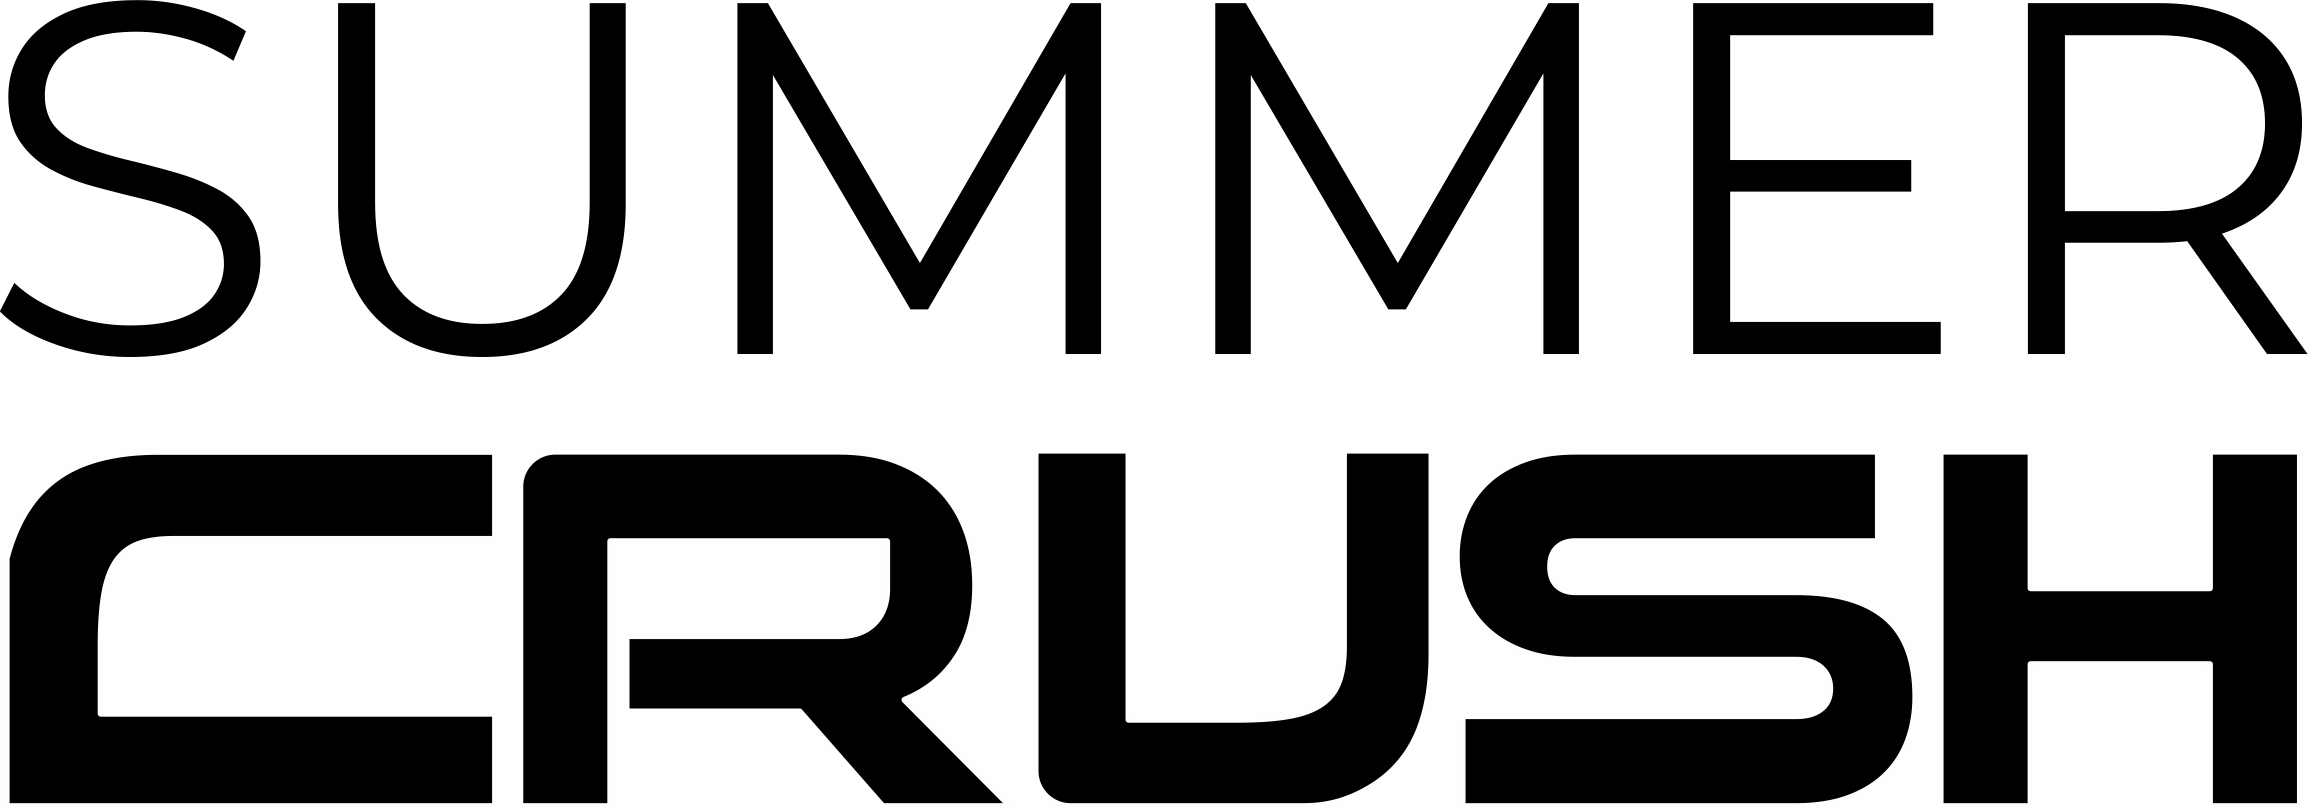 Logo Summer Crush Black